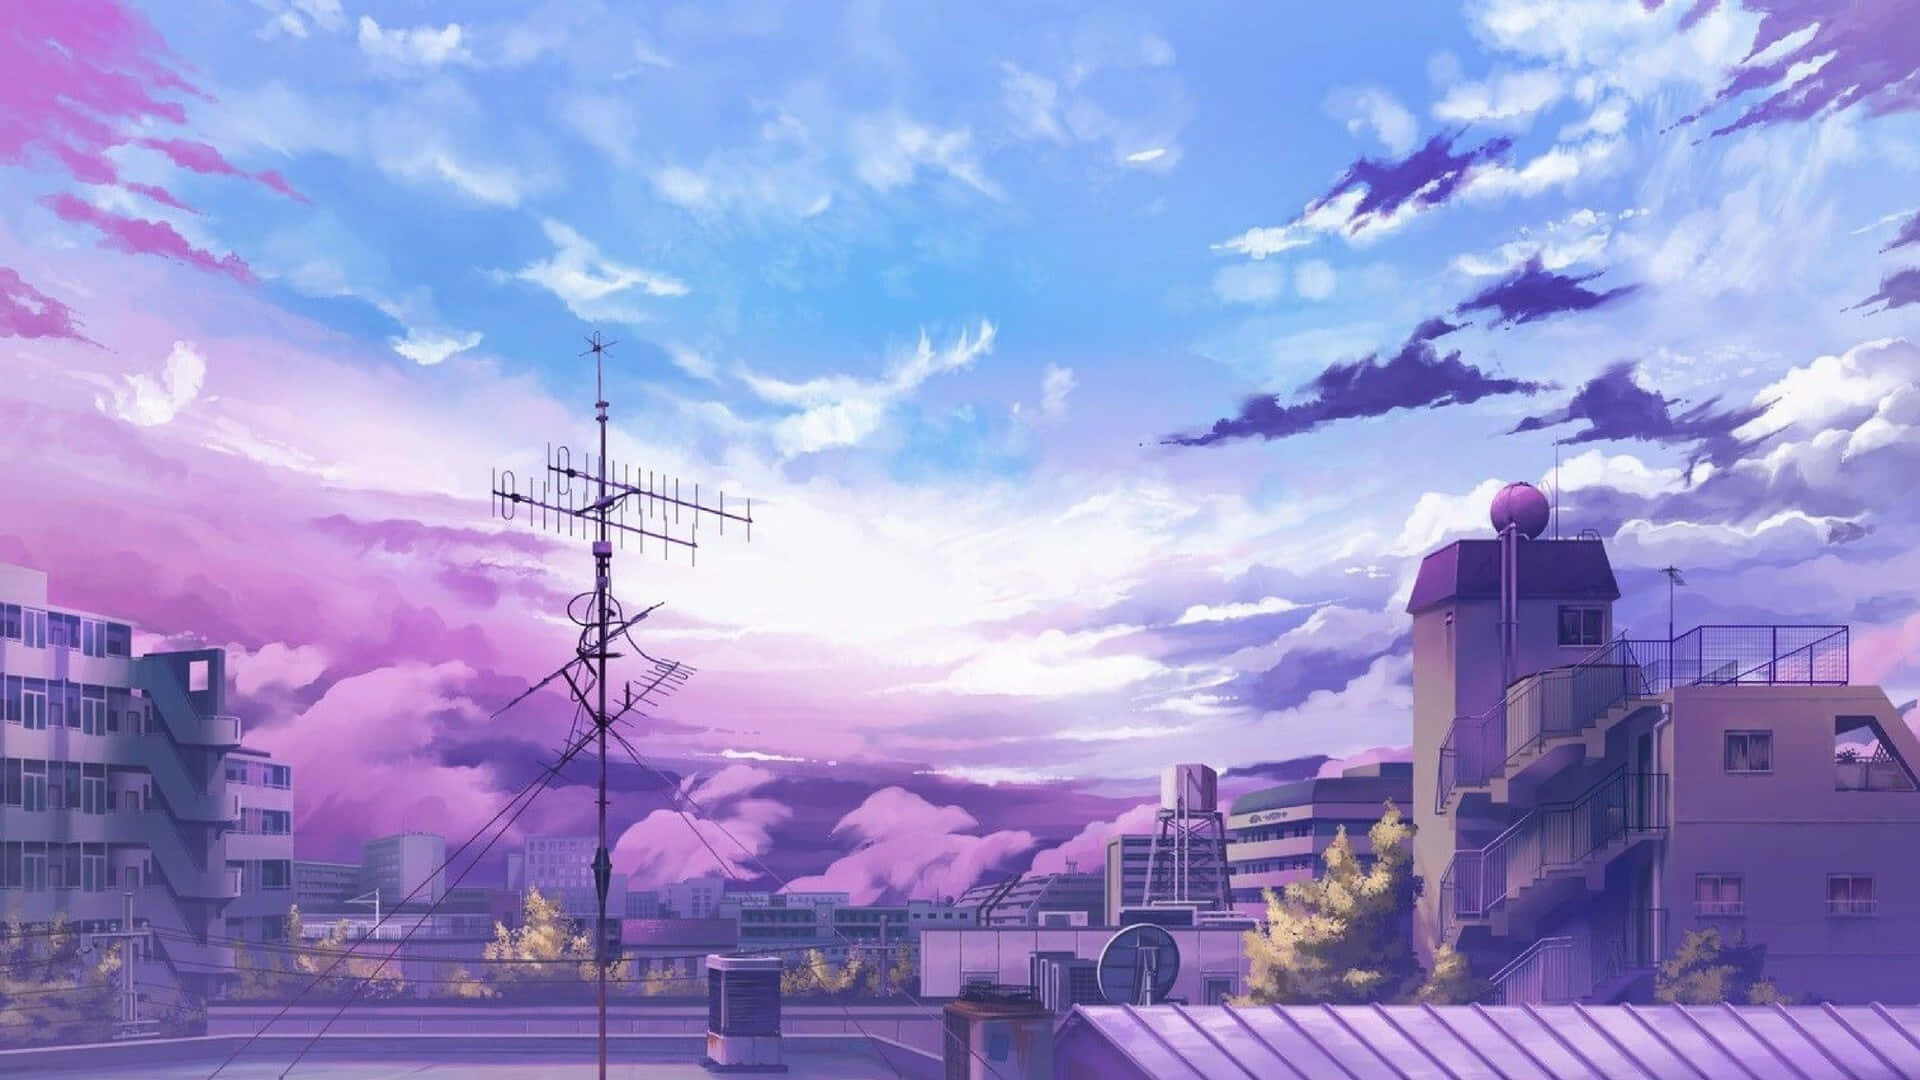 Anime Landscape Images - Free Download on Freepik-demhanvico.com.vn